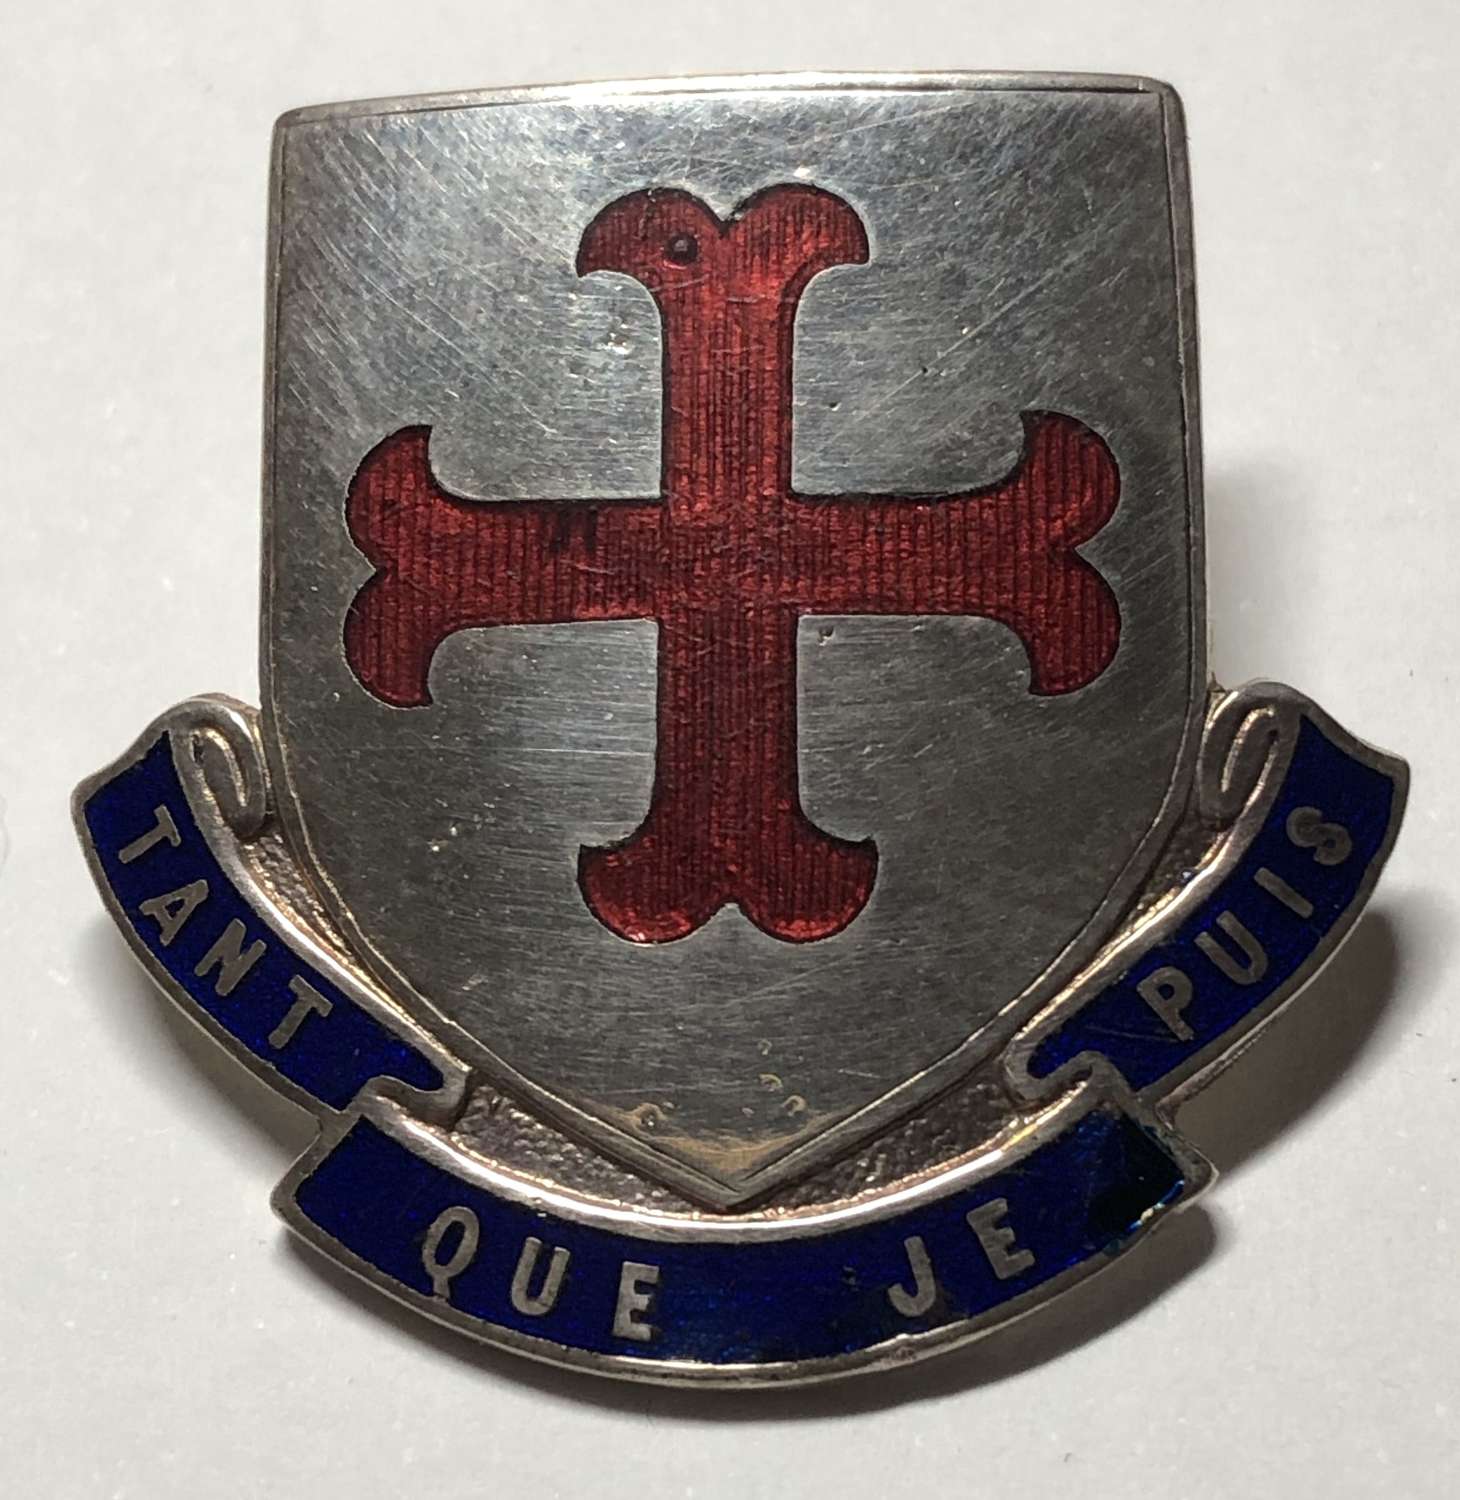 Enfield Grammar School cap badge by Collins, London